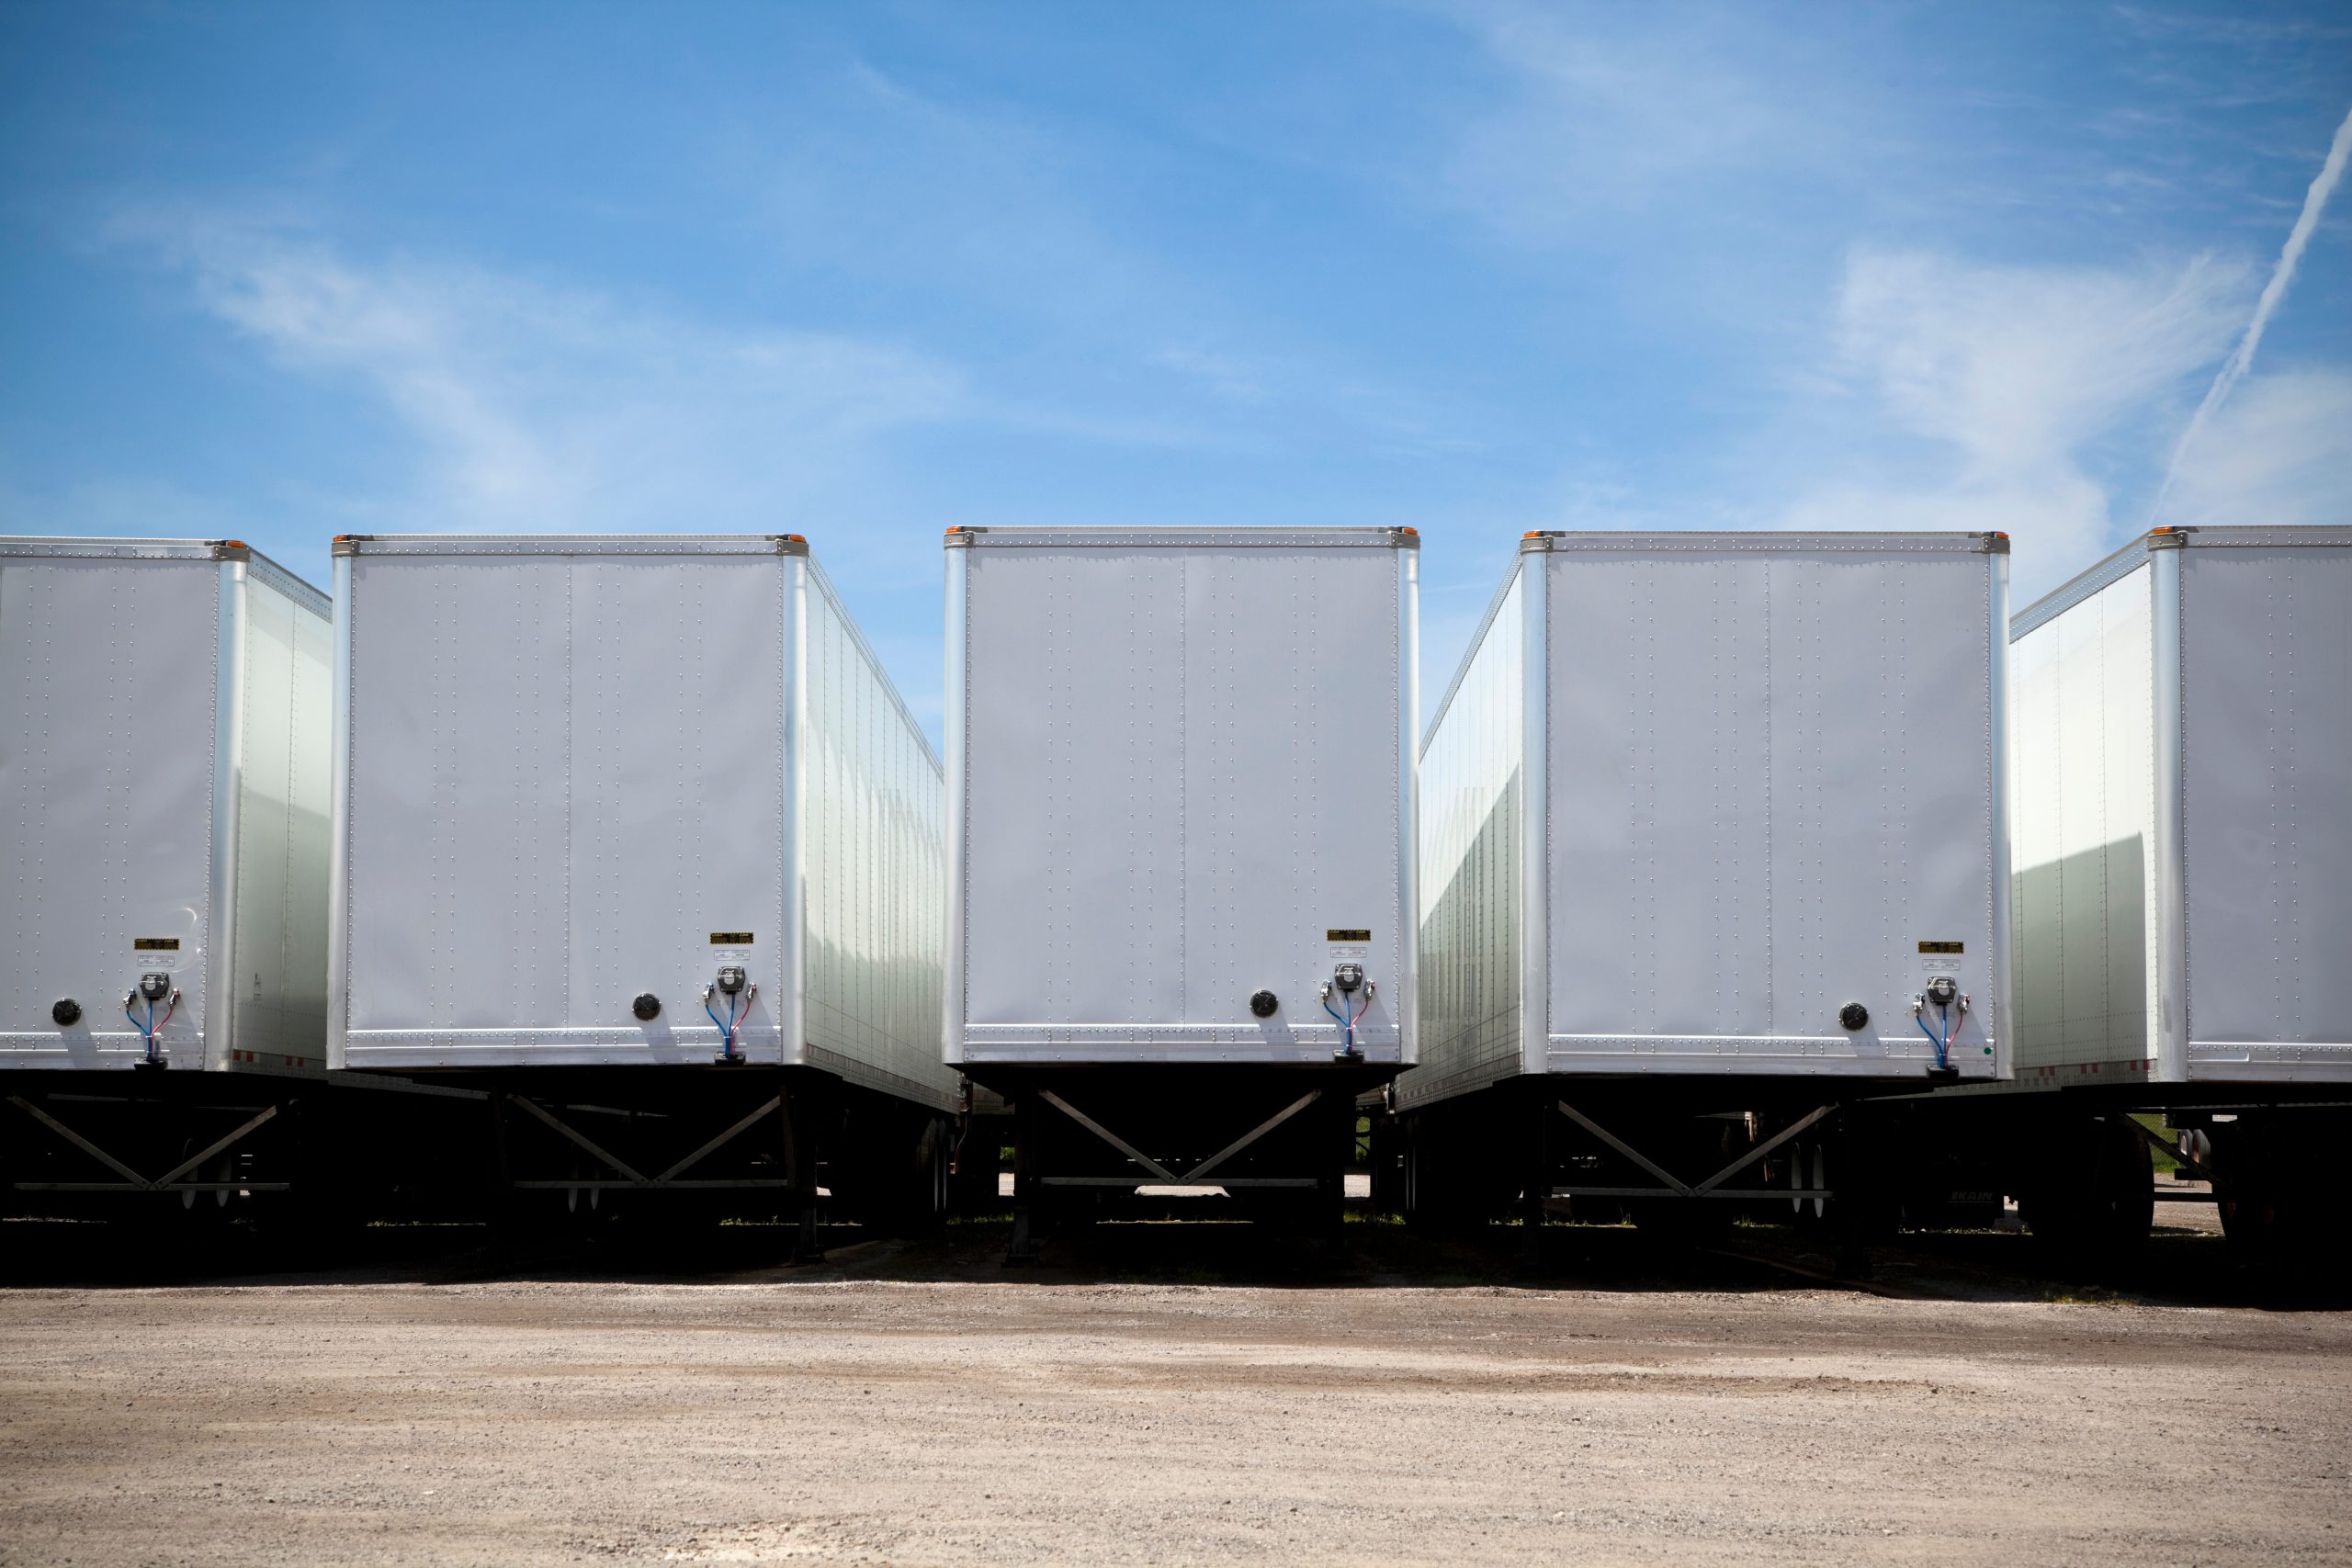 Key Considerations for Semi-Truck Storage Facilities